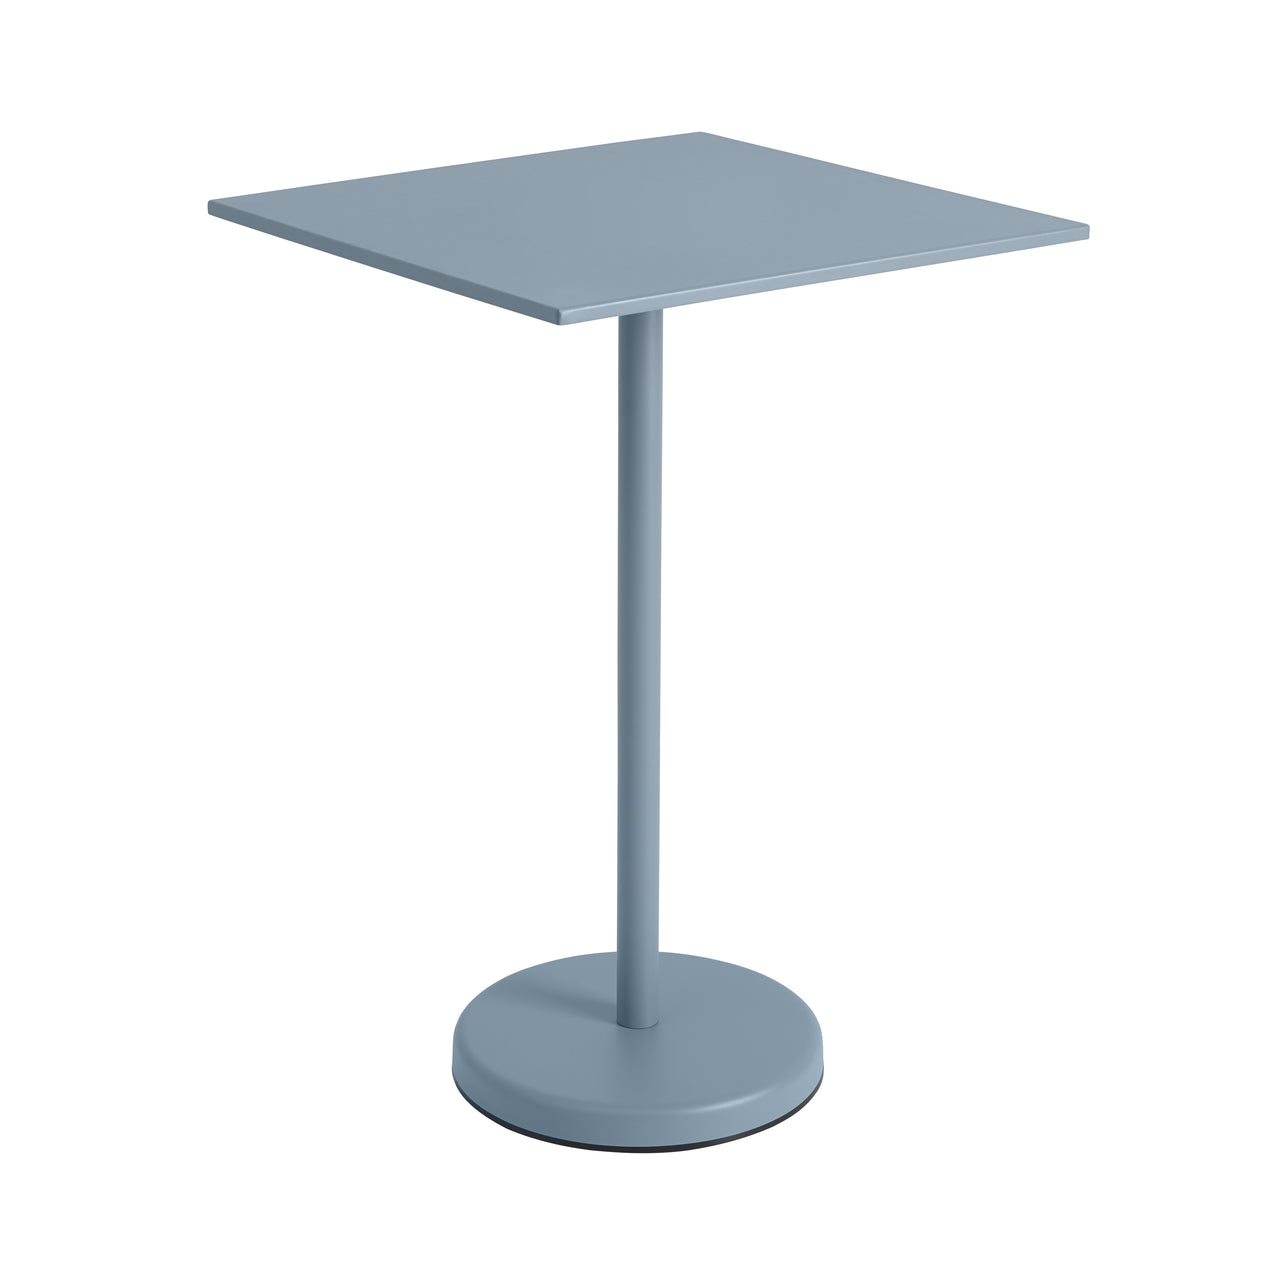 Linear Steel Café Table: Large - 41.3